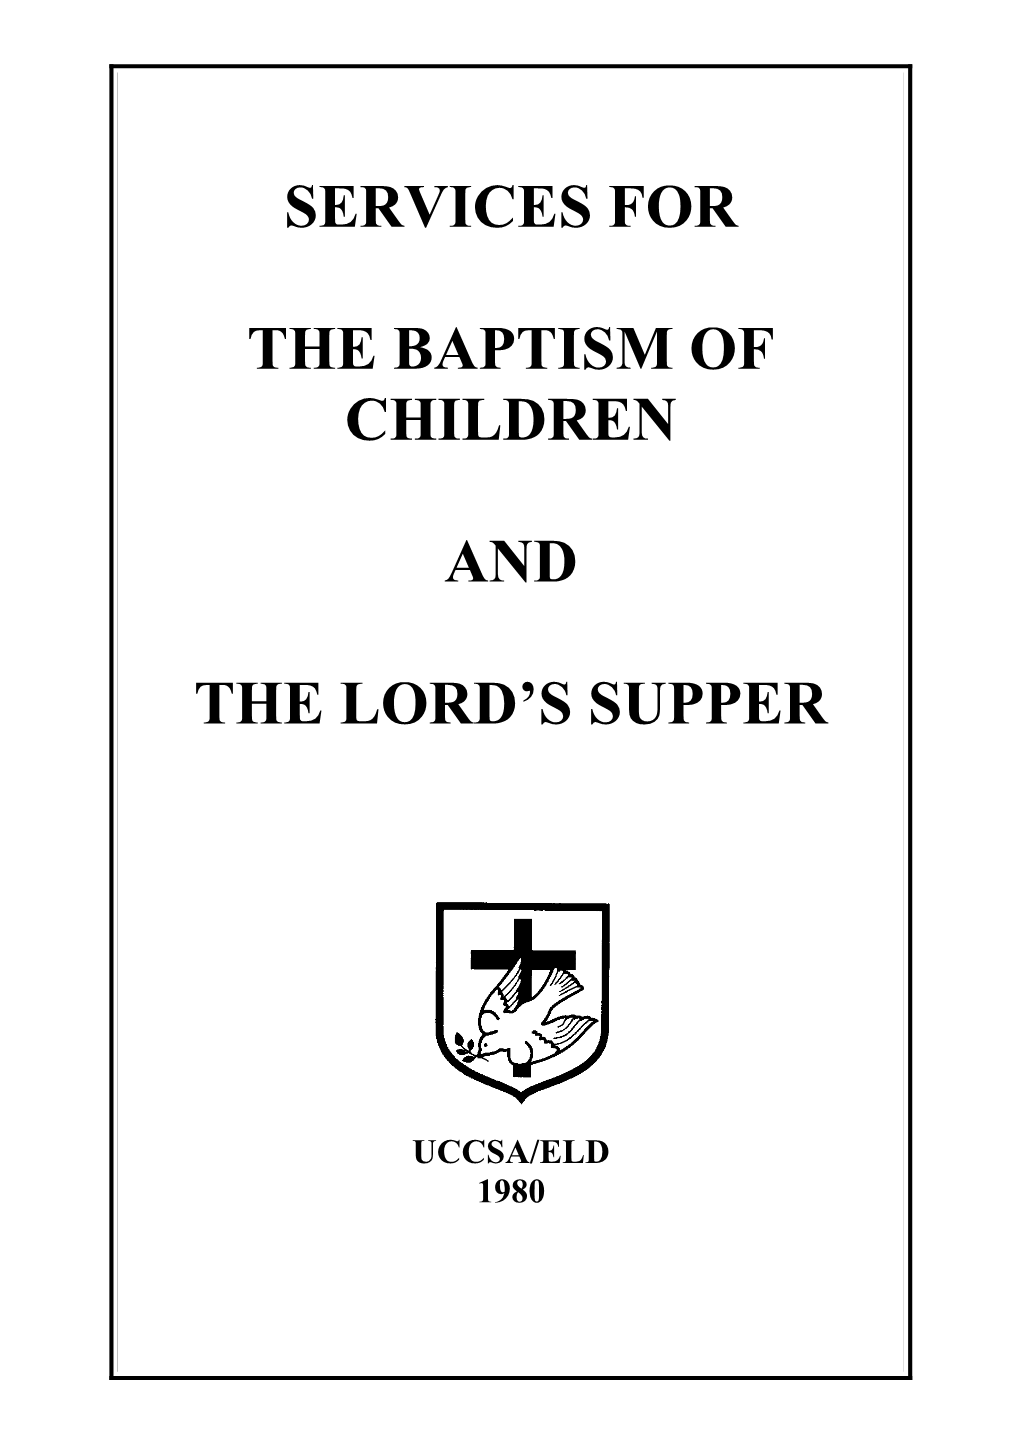 The Baptism of Children